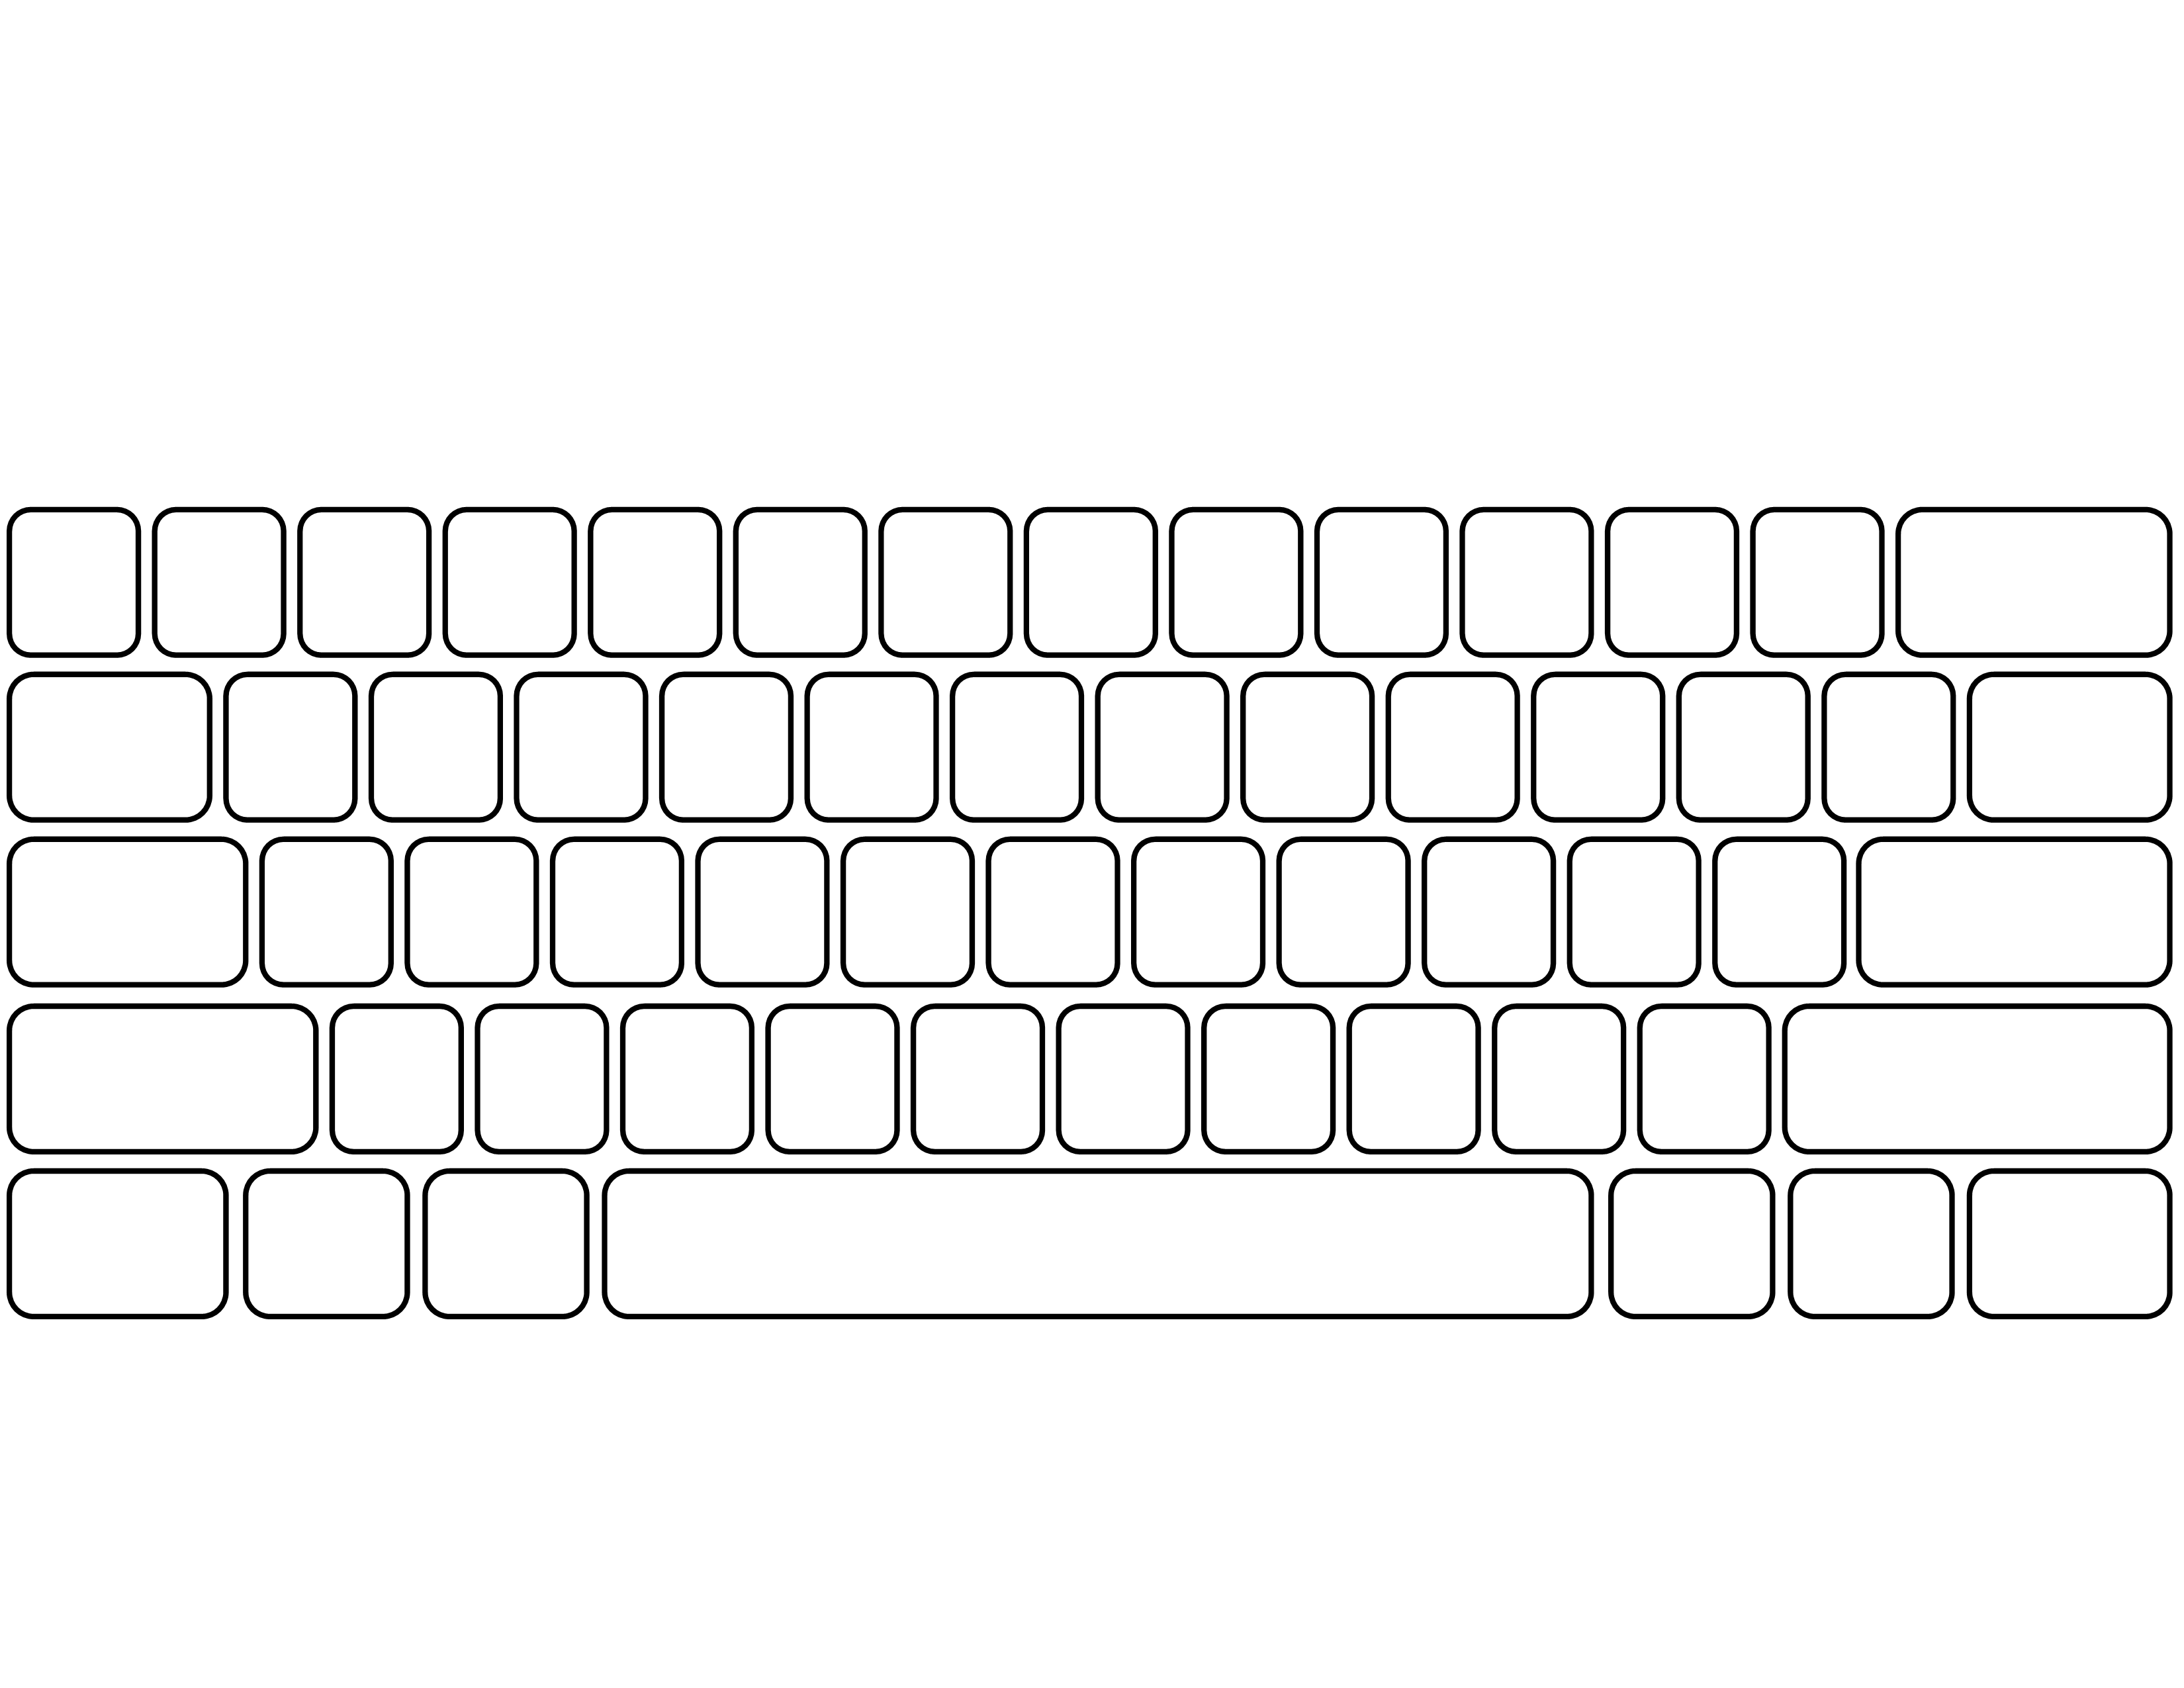 Ginger s Technology Shoppe Keyboard Lessons Keyboarding Computer Keyboard